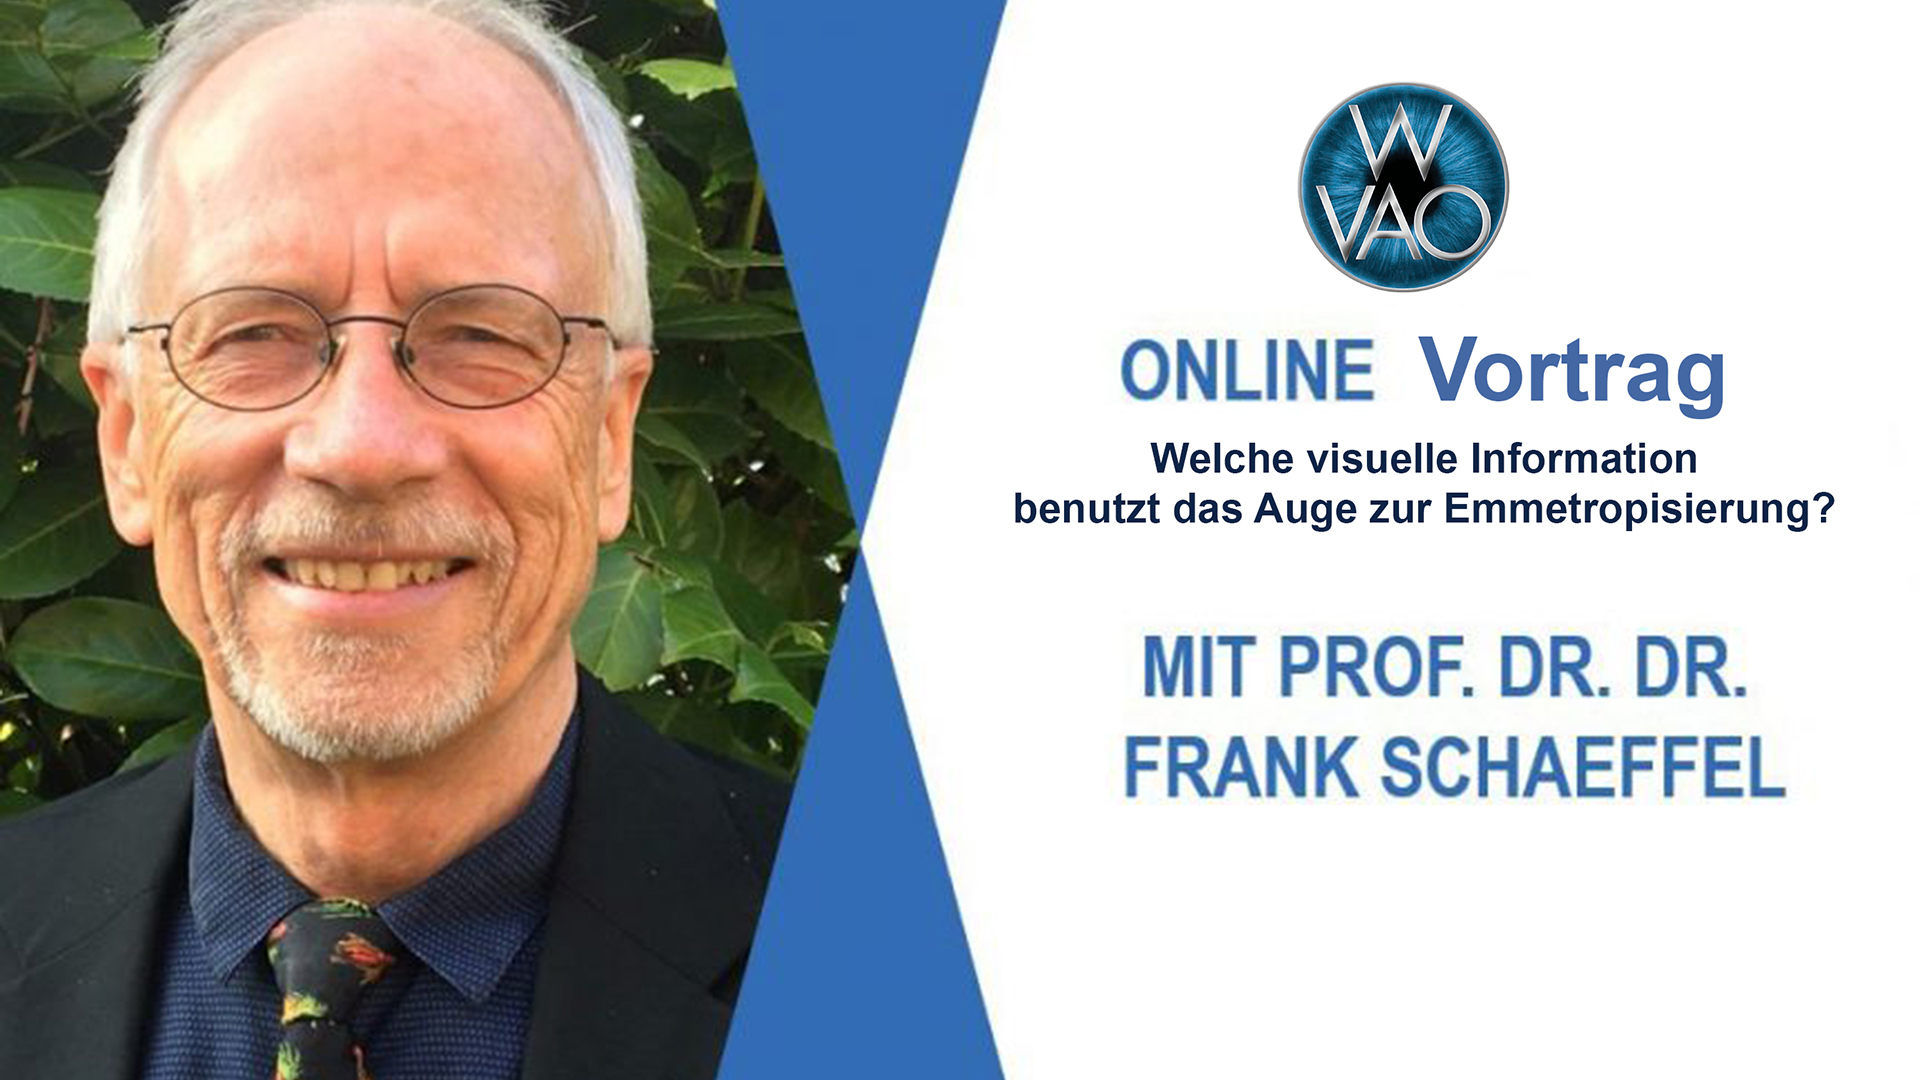 Titelbild Online Vortrag WVAO Frank Schaeffel